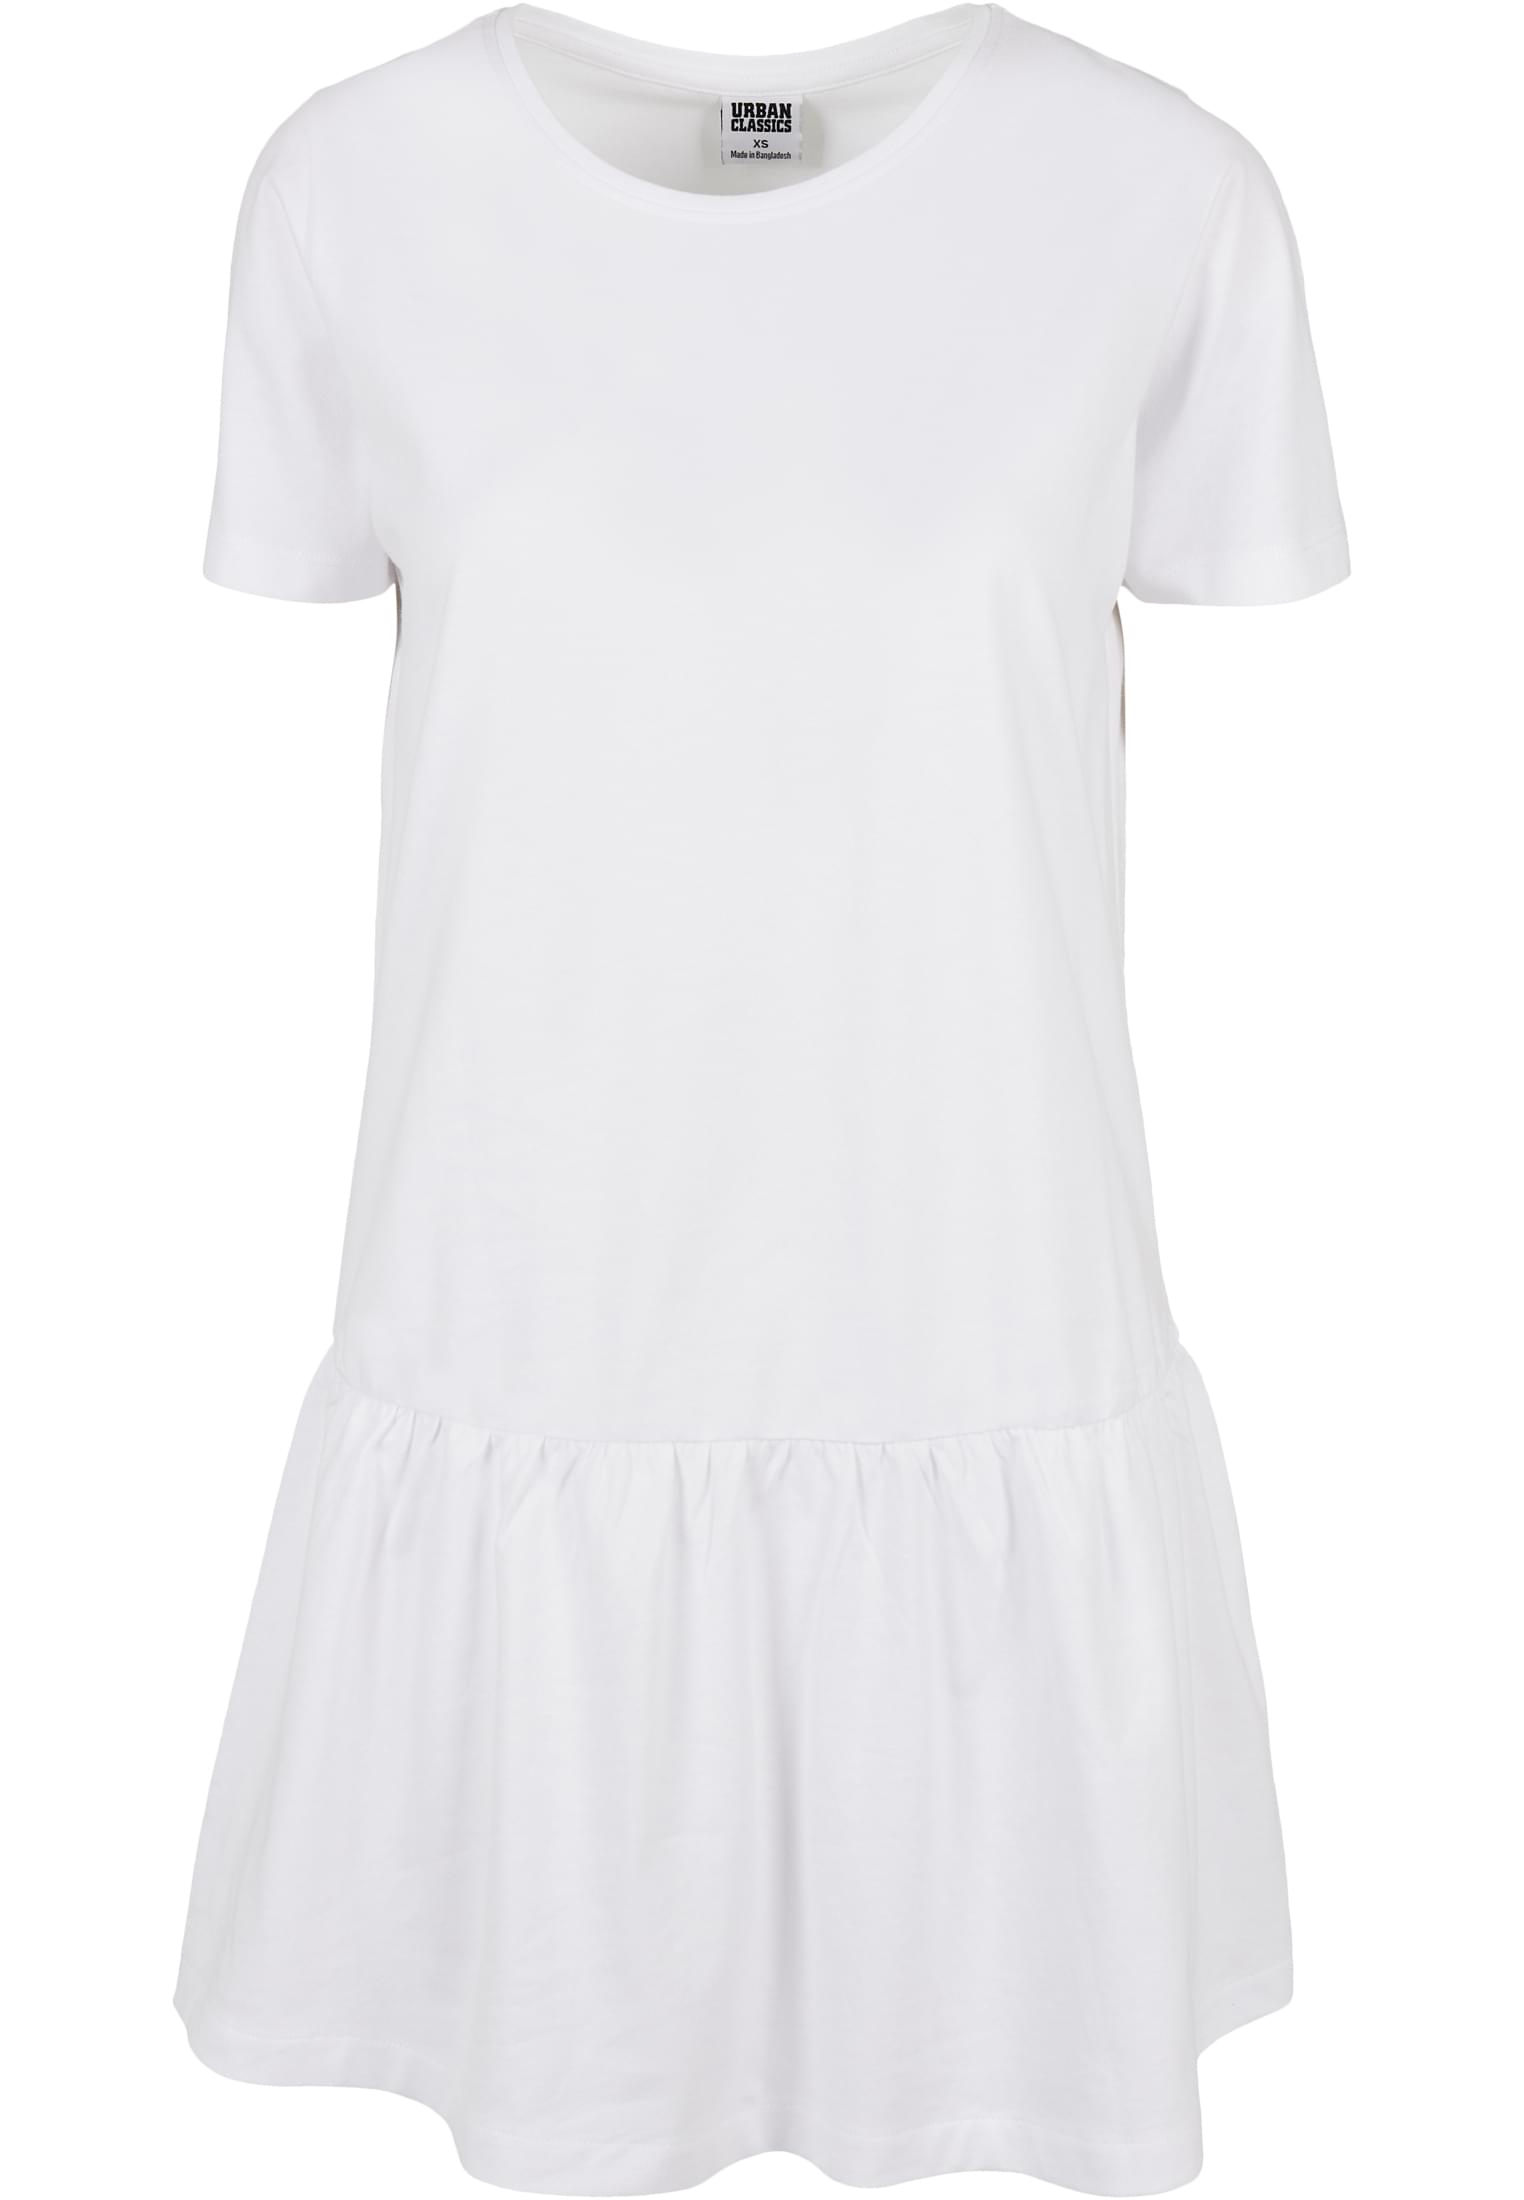 Frauen Ladies Valance Tee Dress in Farbe white